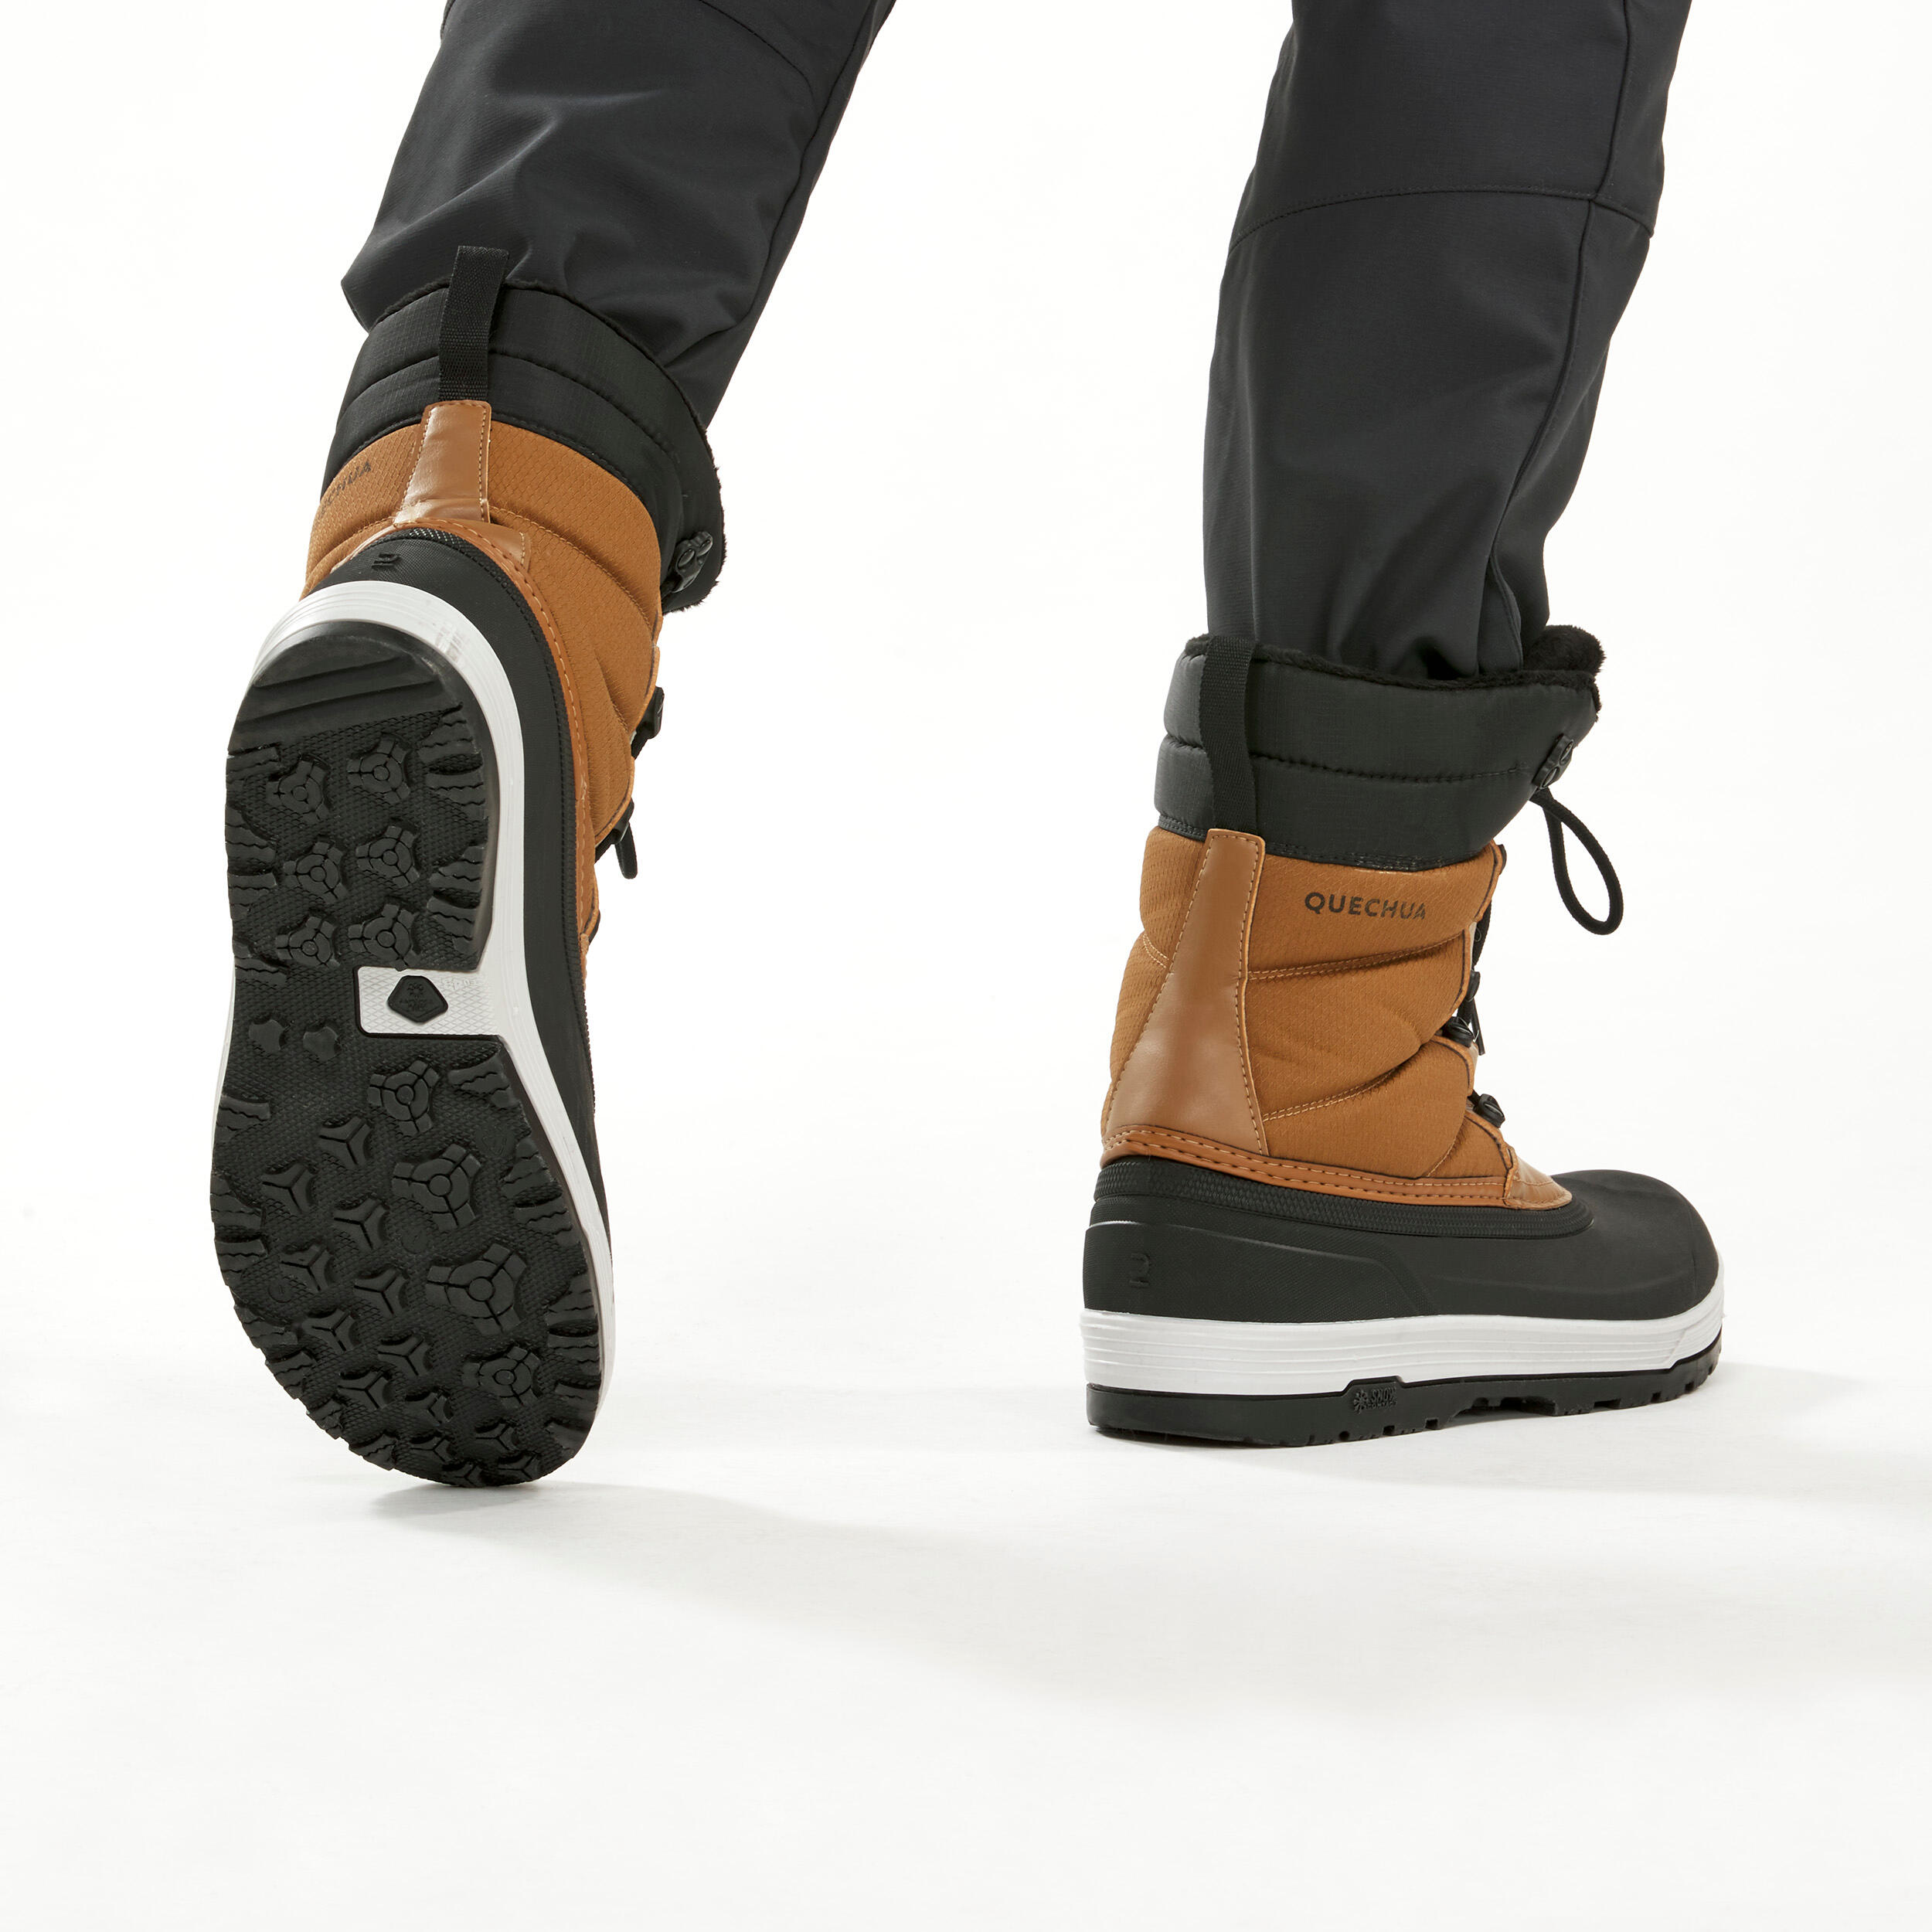 Men’s Warm Waterproof Snow Hiking Boots  - SH500 X- WARM - Lace 8/9